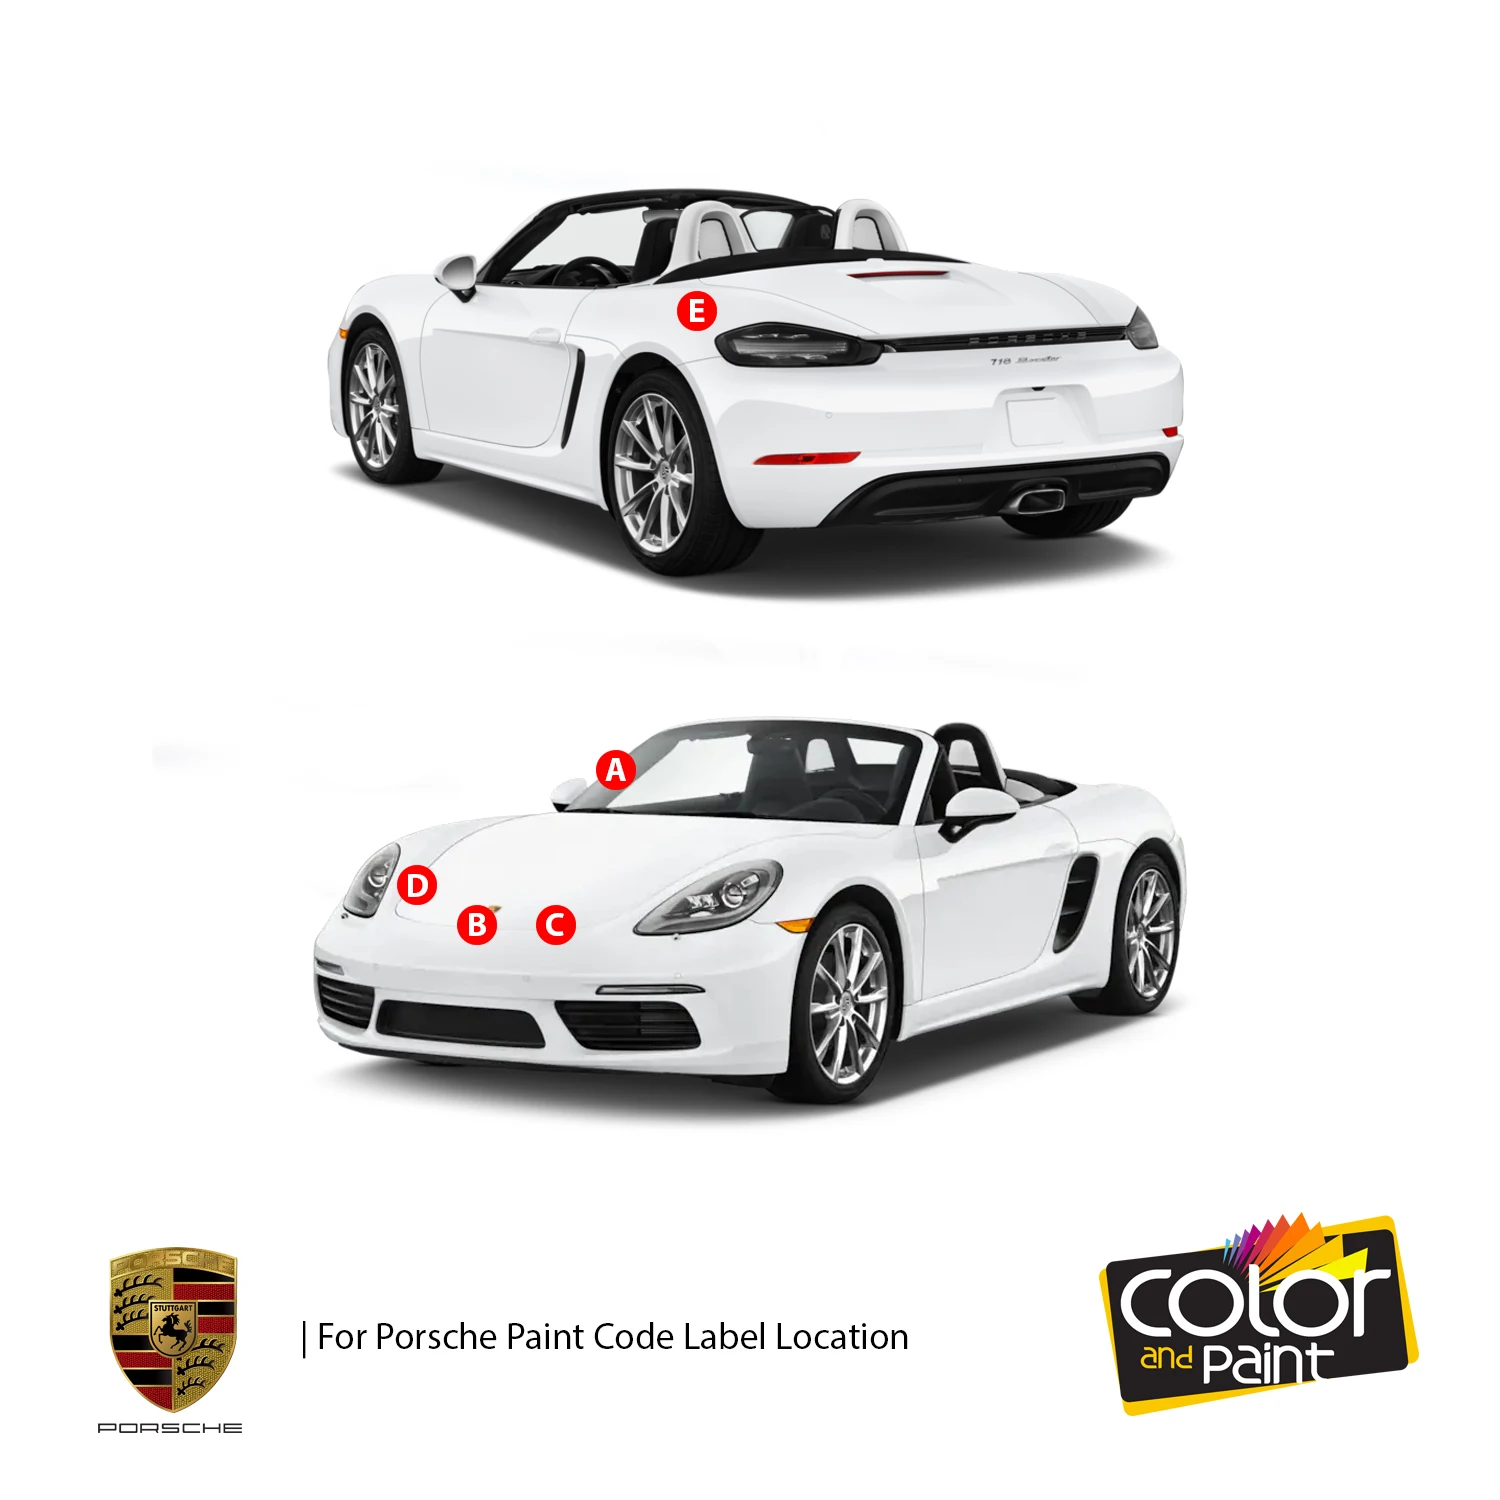 

Color and Paint for Porsche Automotive Touch Up Paint - BURGUNDERROT - 017 - Paint Scratch Repair, Exact Match